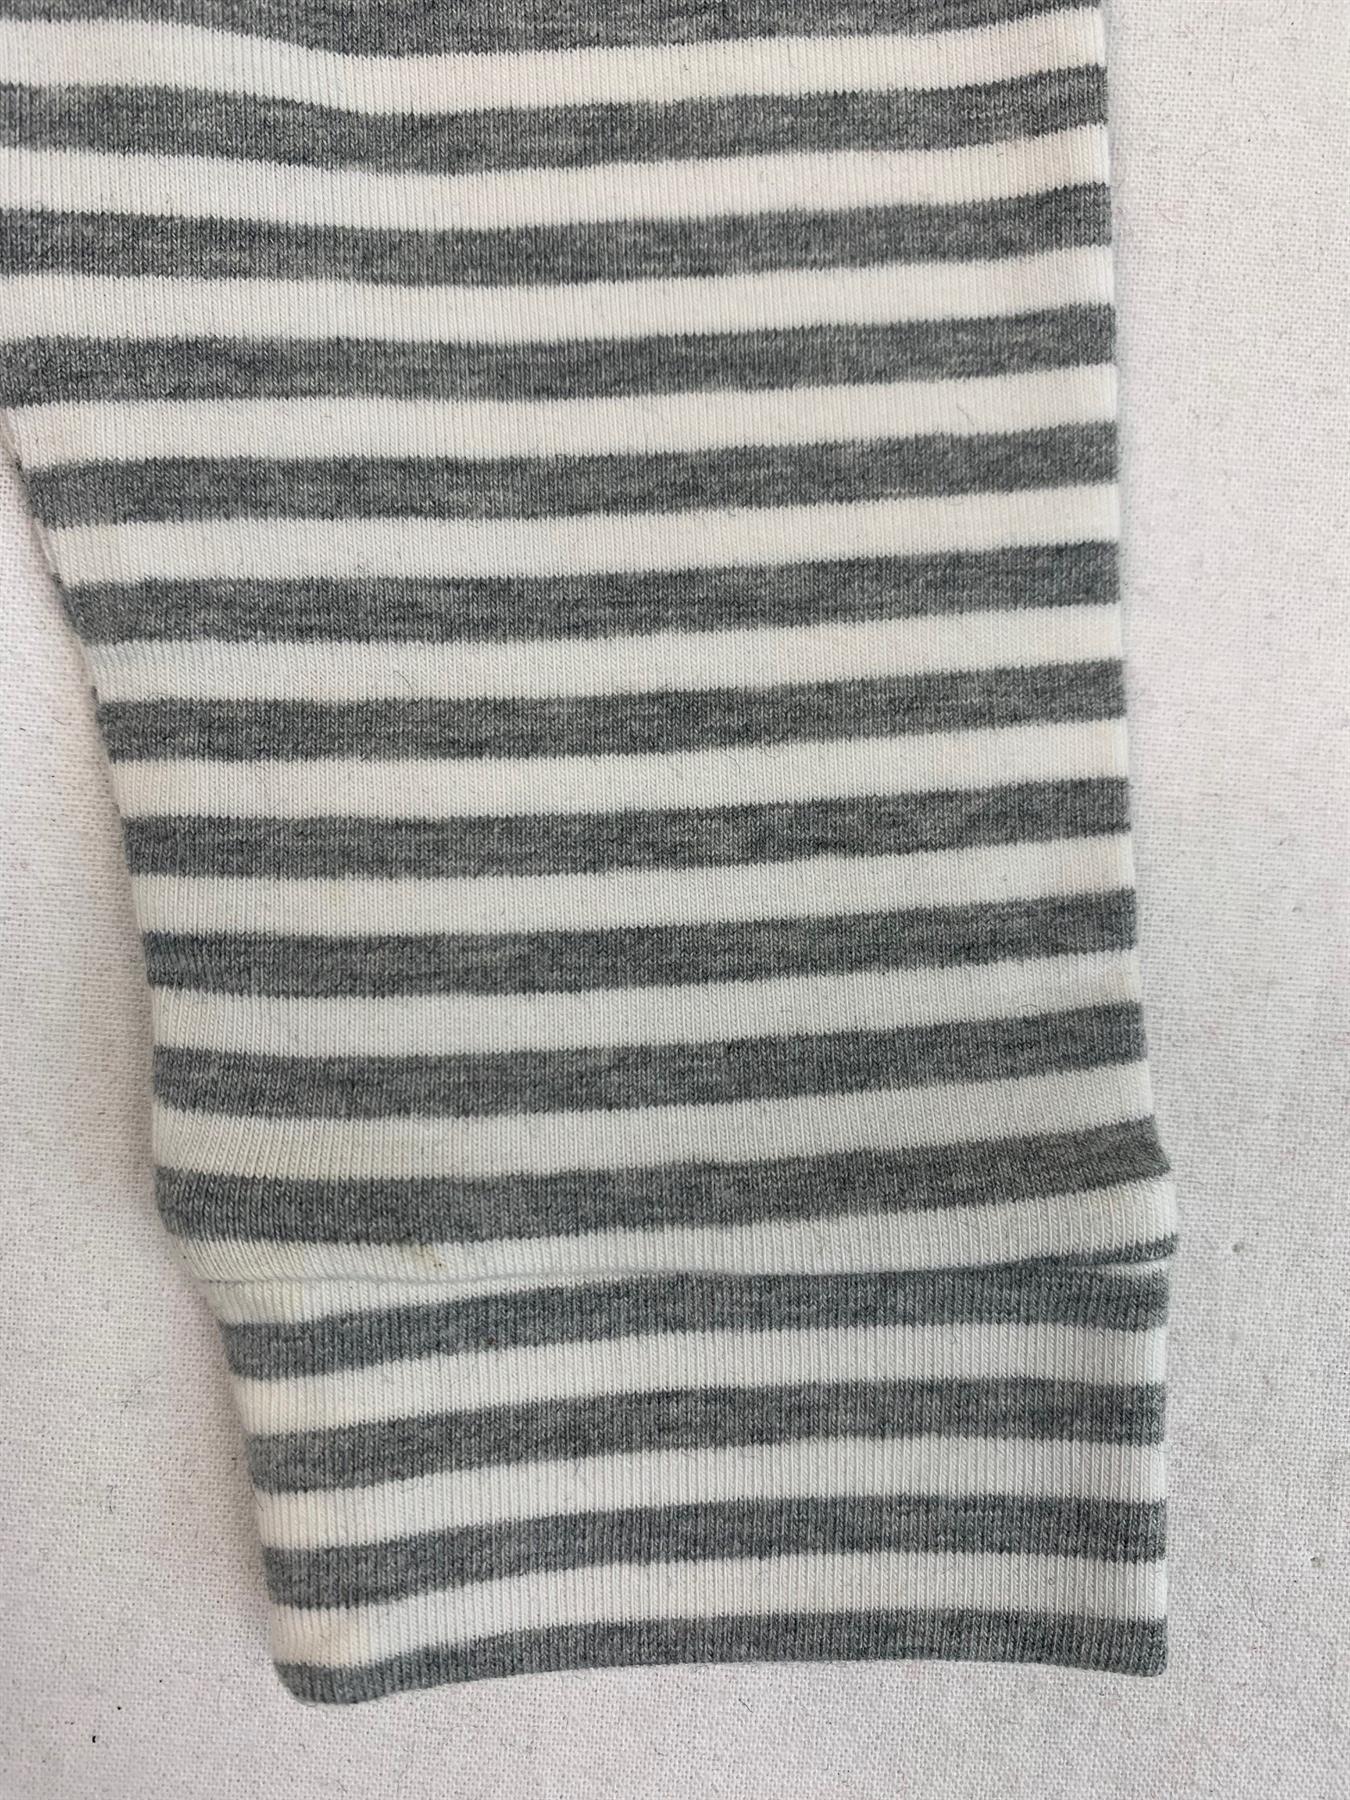 Childrens Grey striped Leggings Ex-High Street Brand